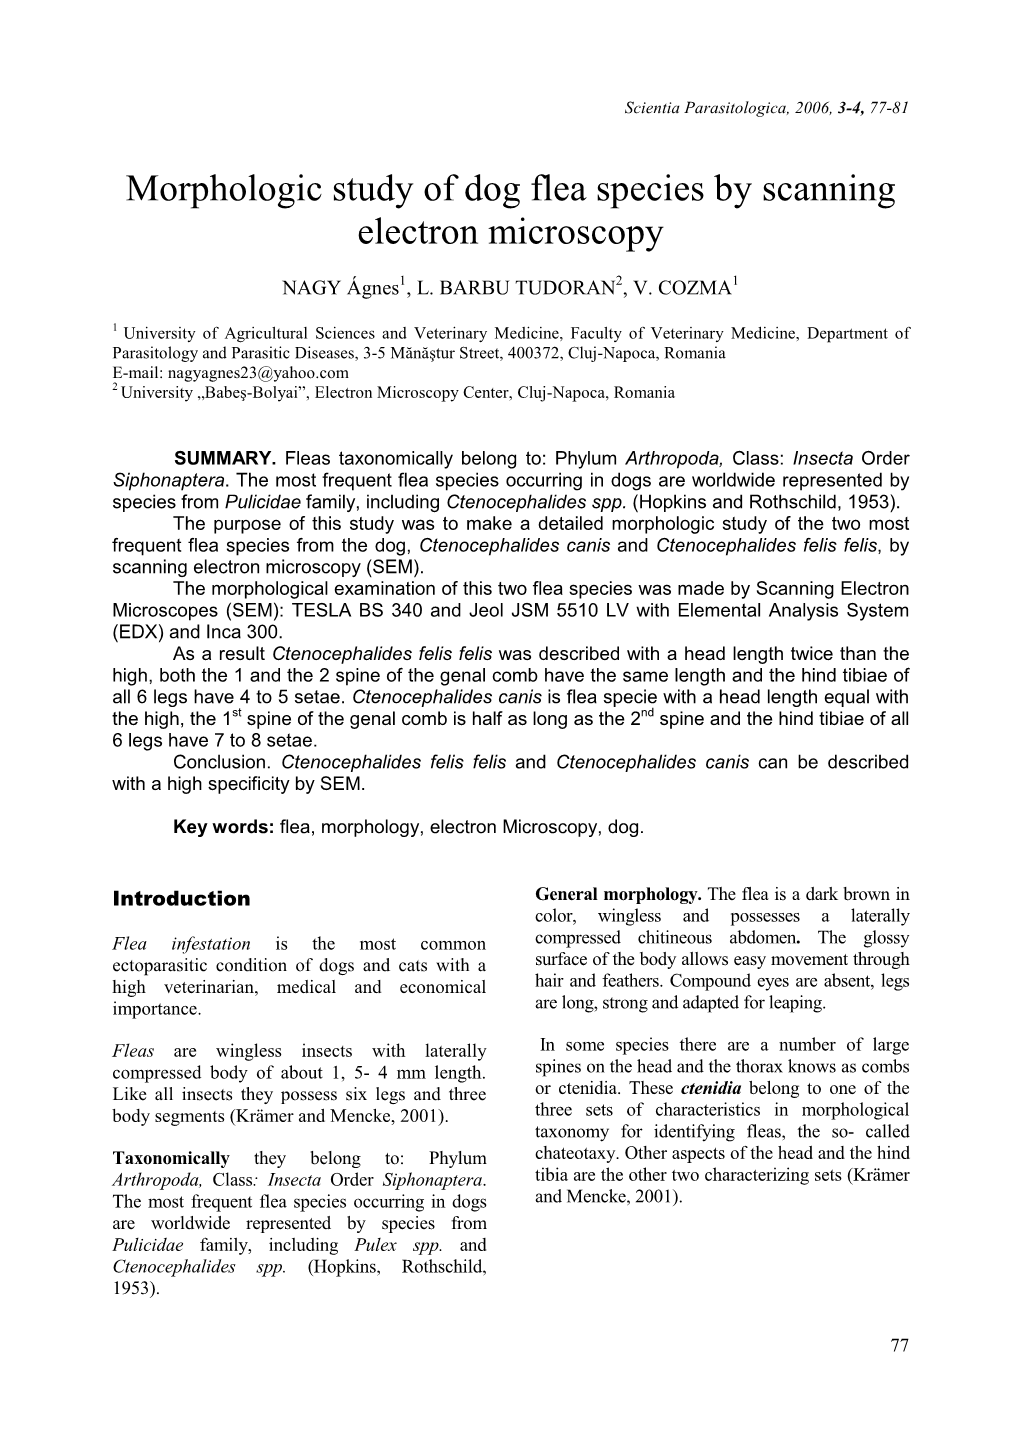 Morphologic Study of Dog Flea Species by Scanning Electron Microscopy